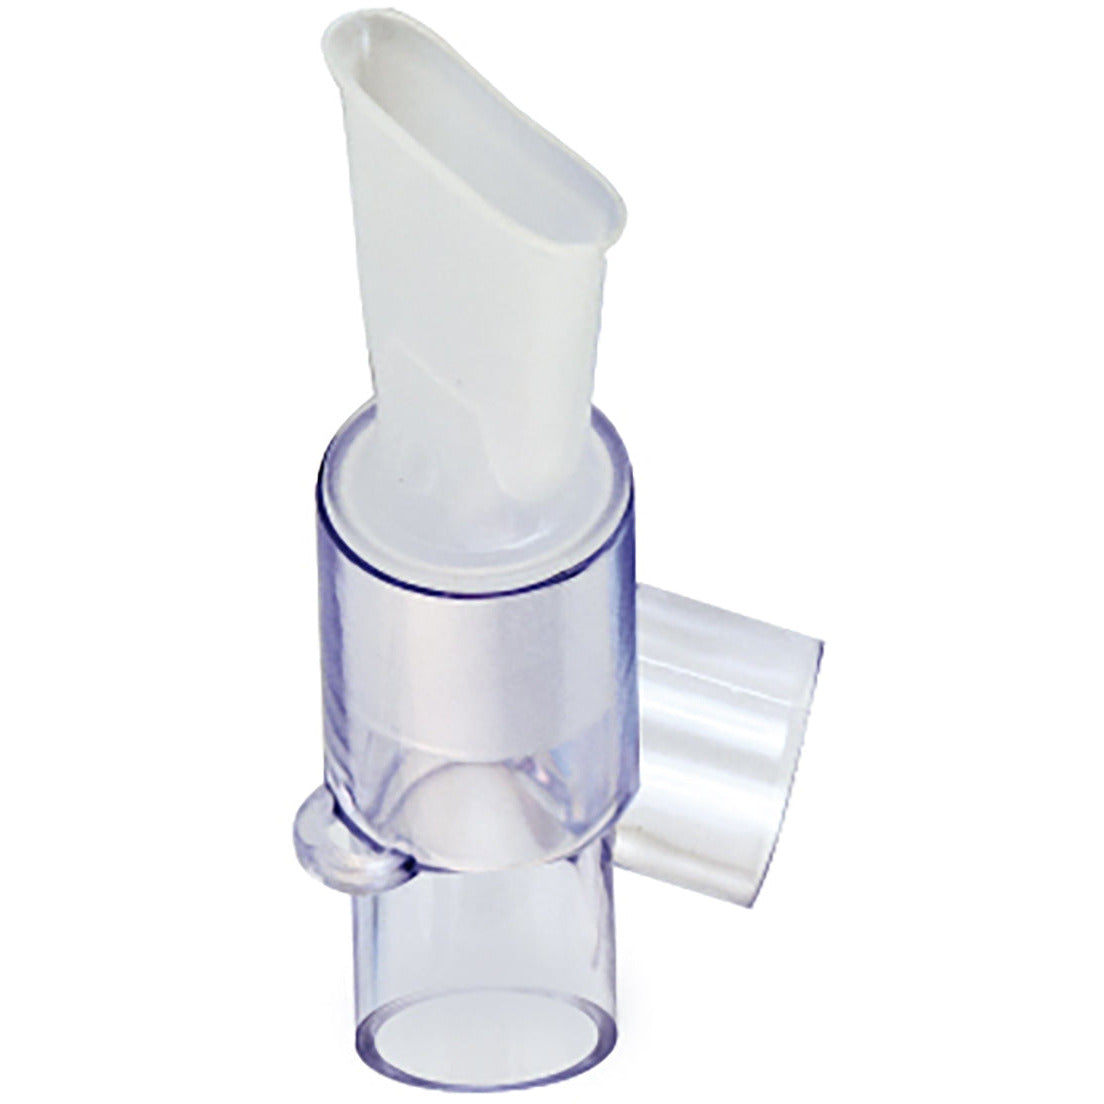 A&D Nebuliser Mouthpiece For UN-014